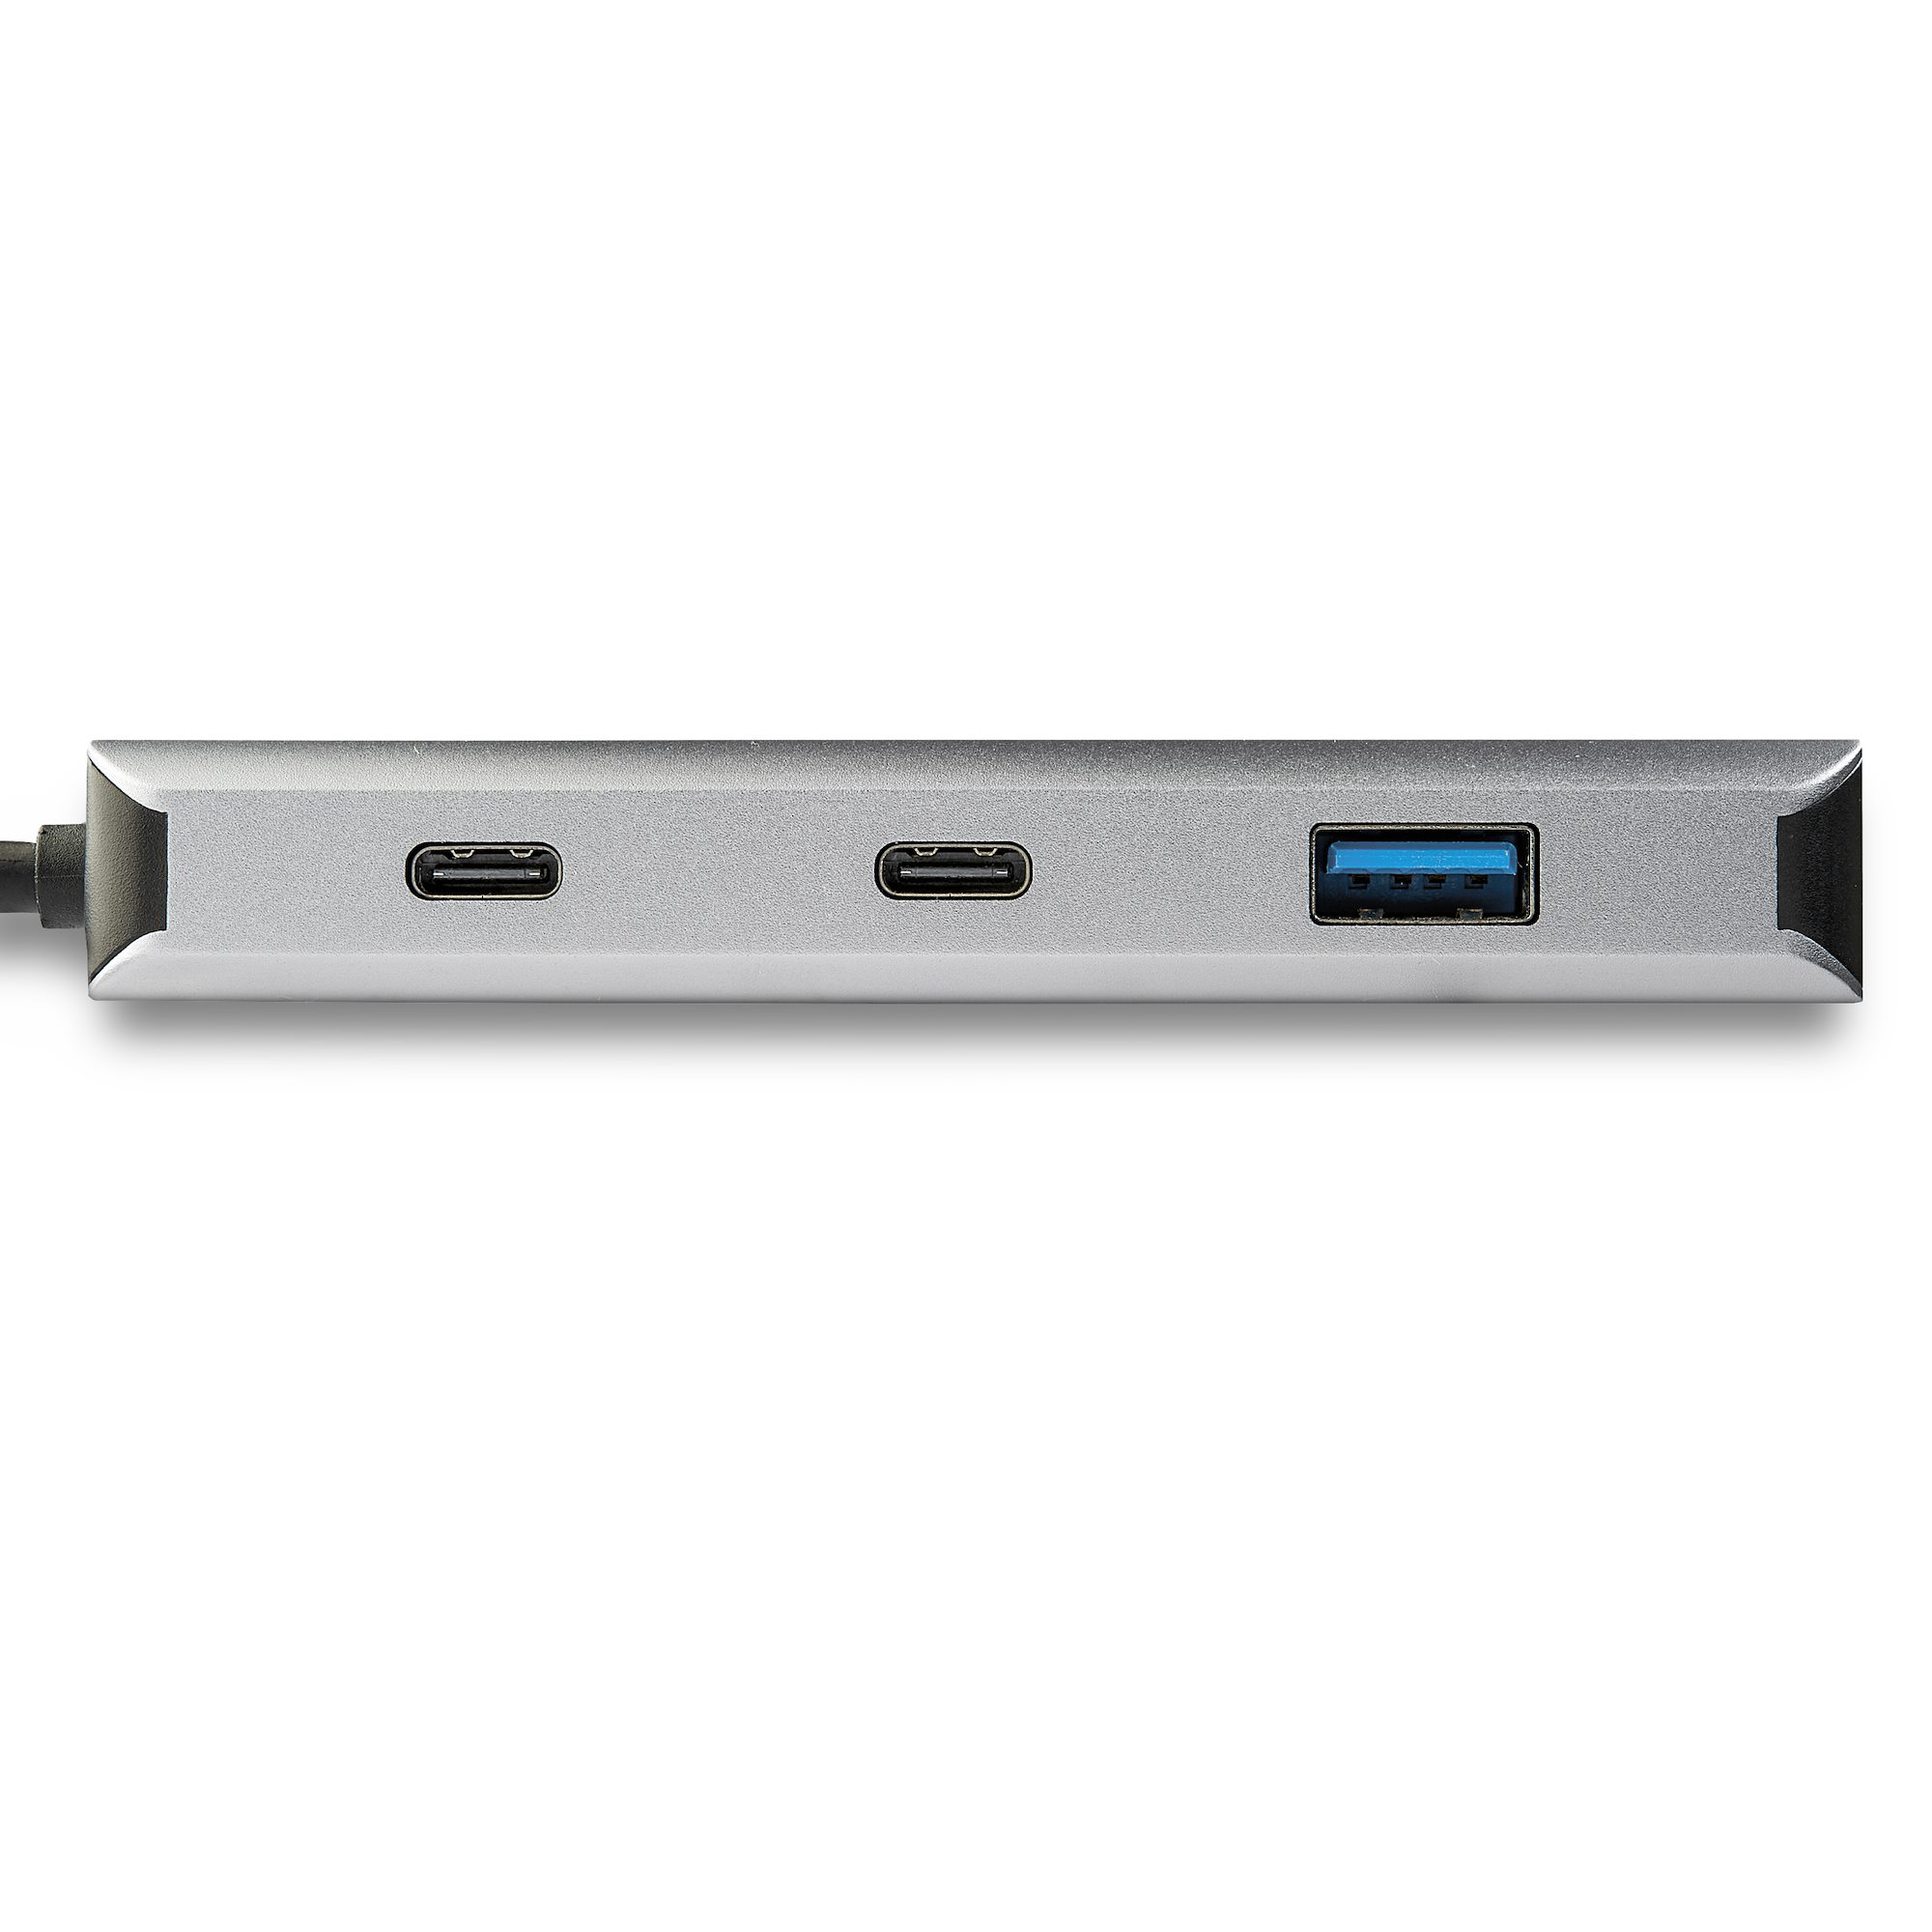 4-Port USB 3.1 Gen 2 10G Hub - 2A2C